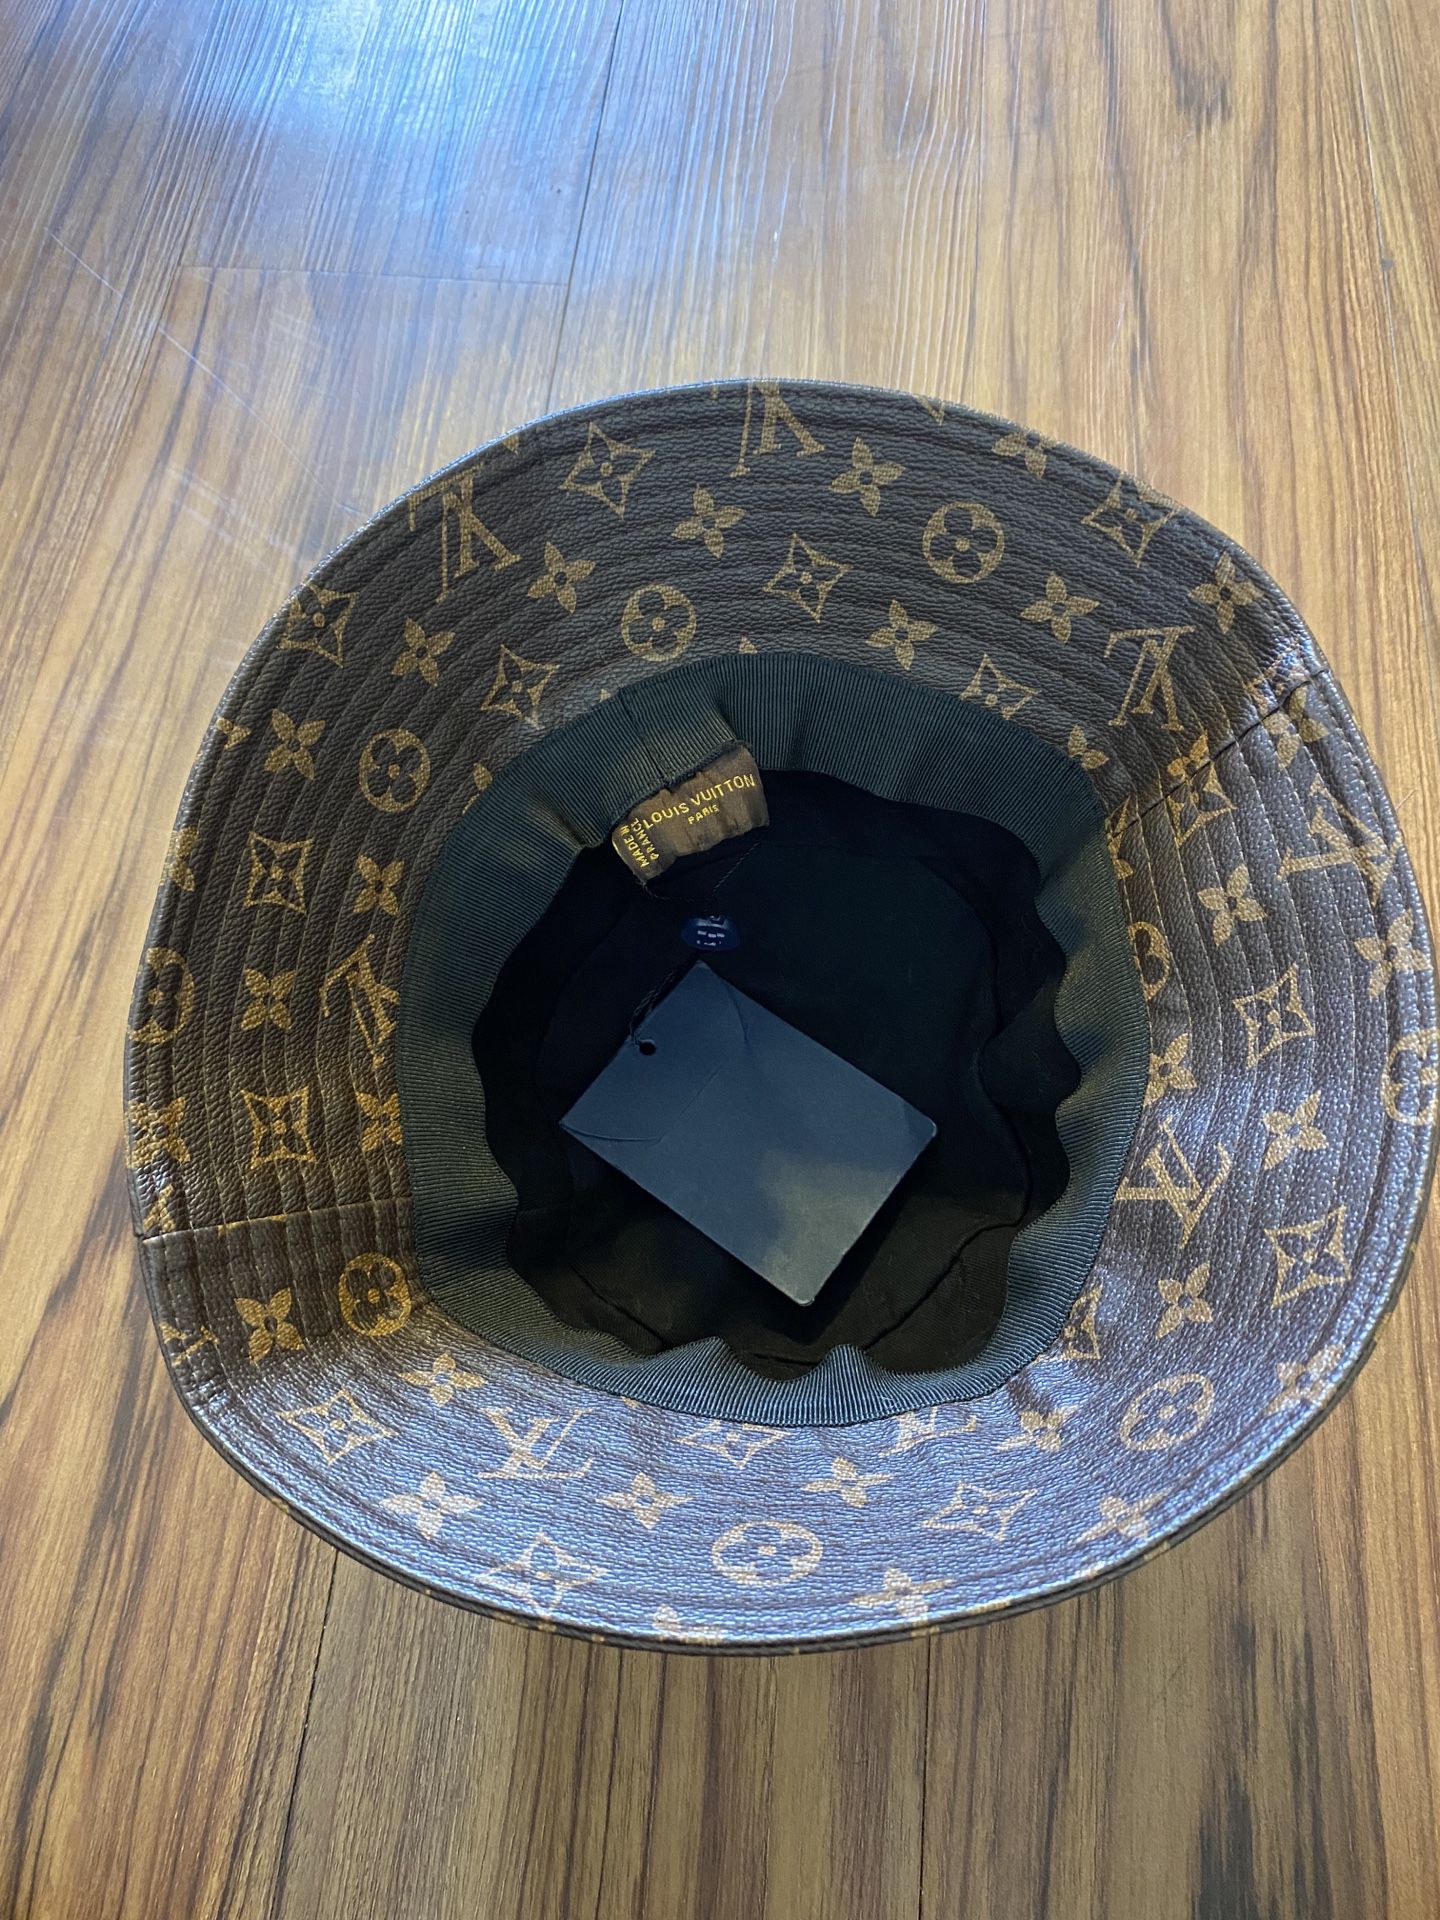 Louis Vuitton denim bucket hat for Sale in Long Beach, CA - OfferUp